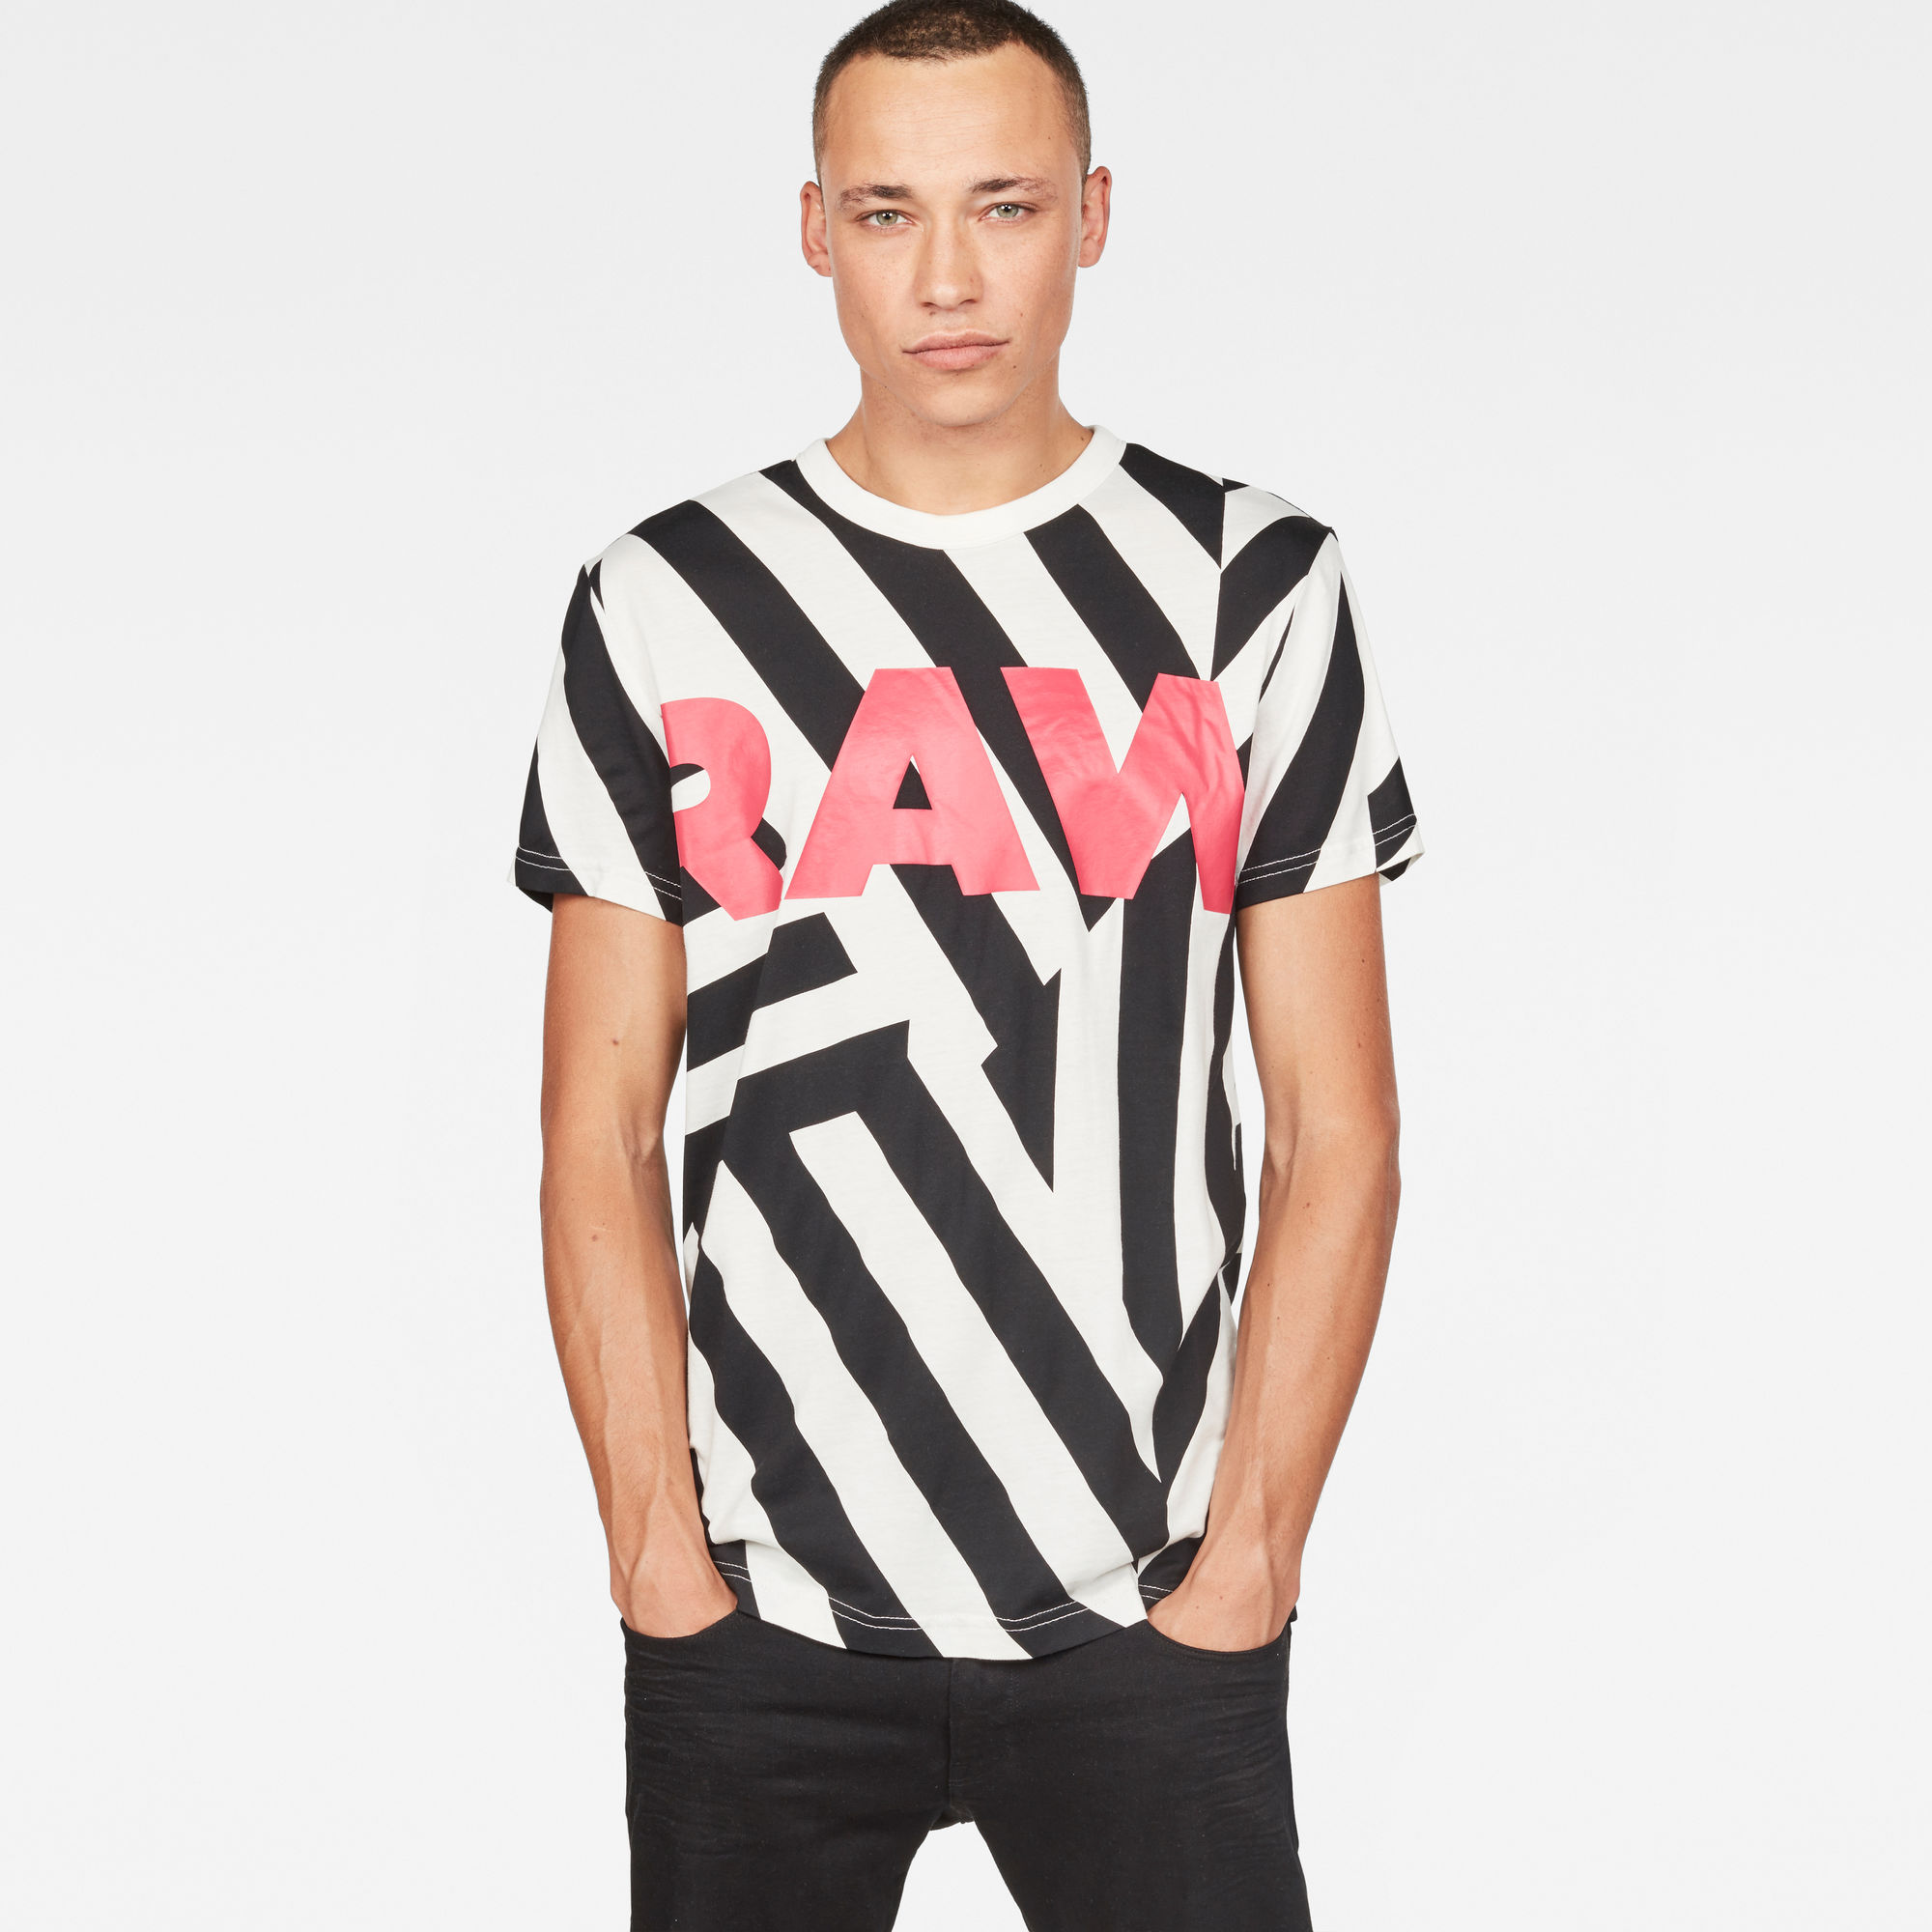 Dazzle Camouflage X25 Print T-Shirt | Black | G-Star RAW®